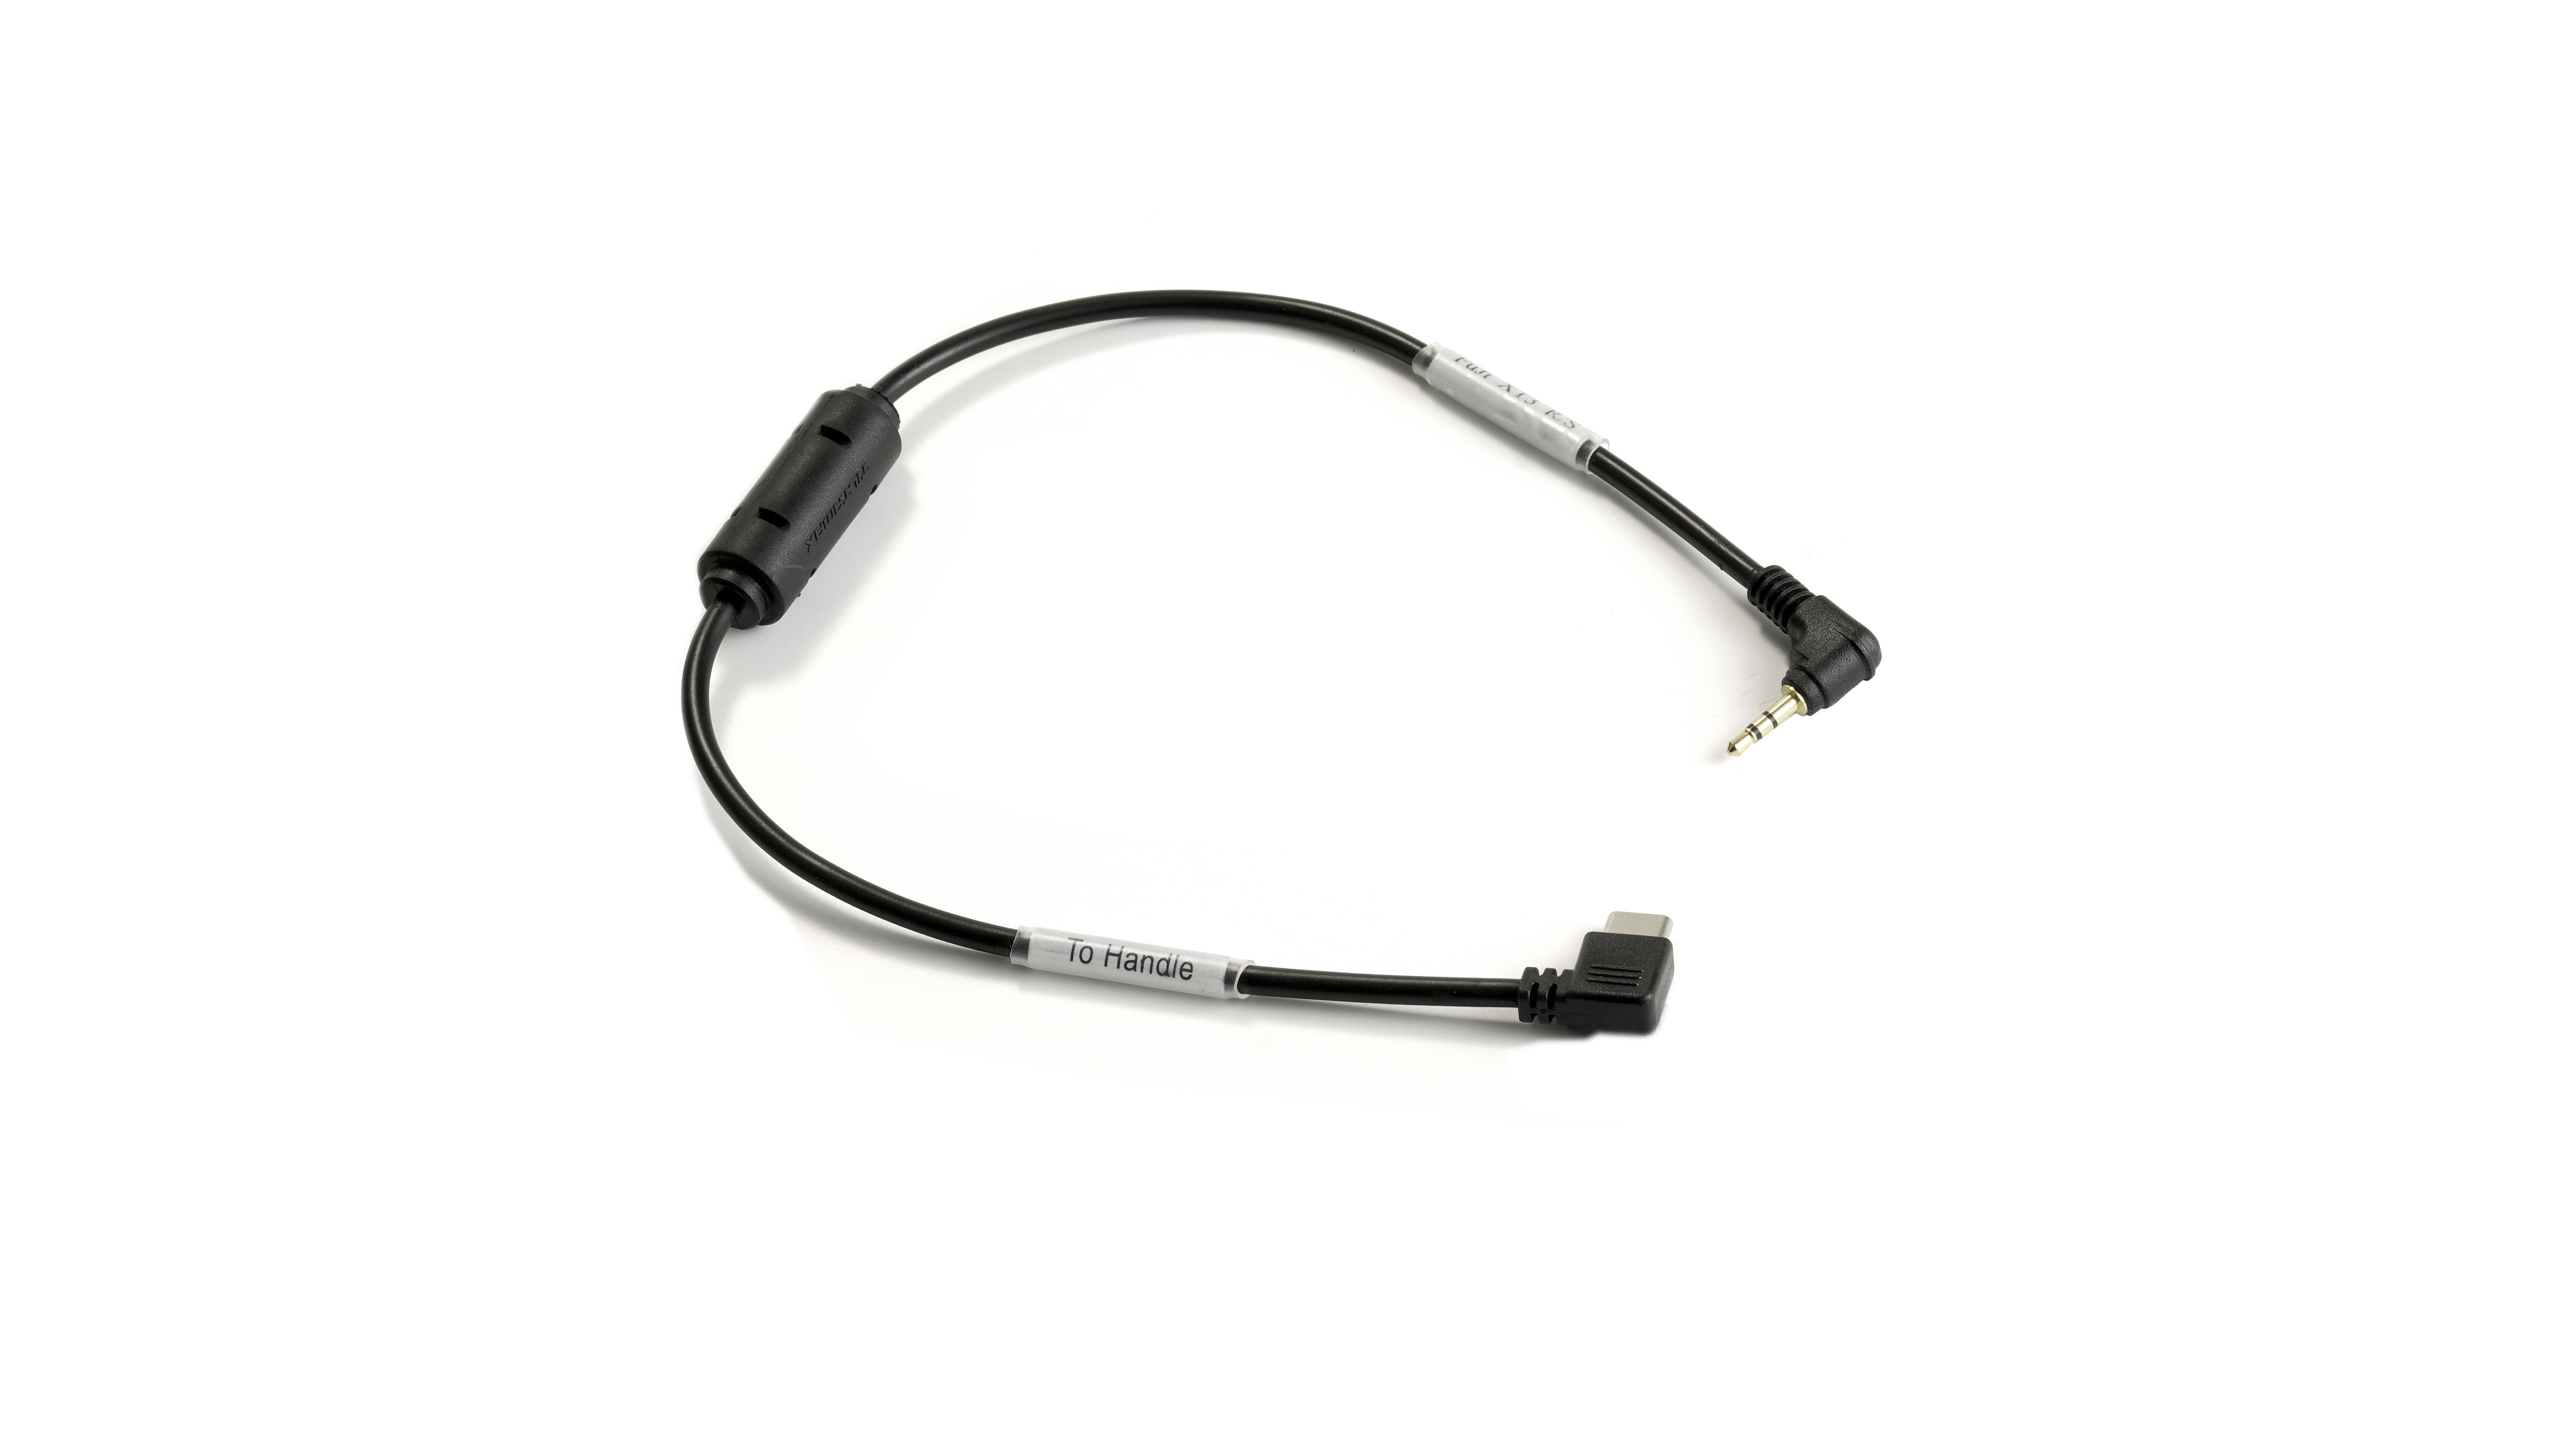 Tilta USB-C Run/Stop Cable for Fujifilm X Series